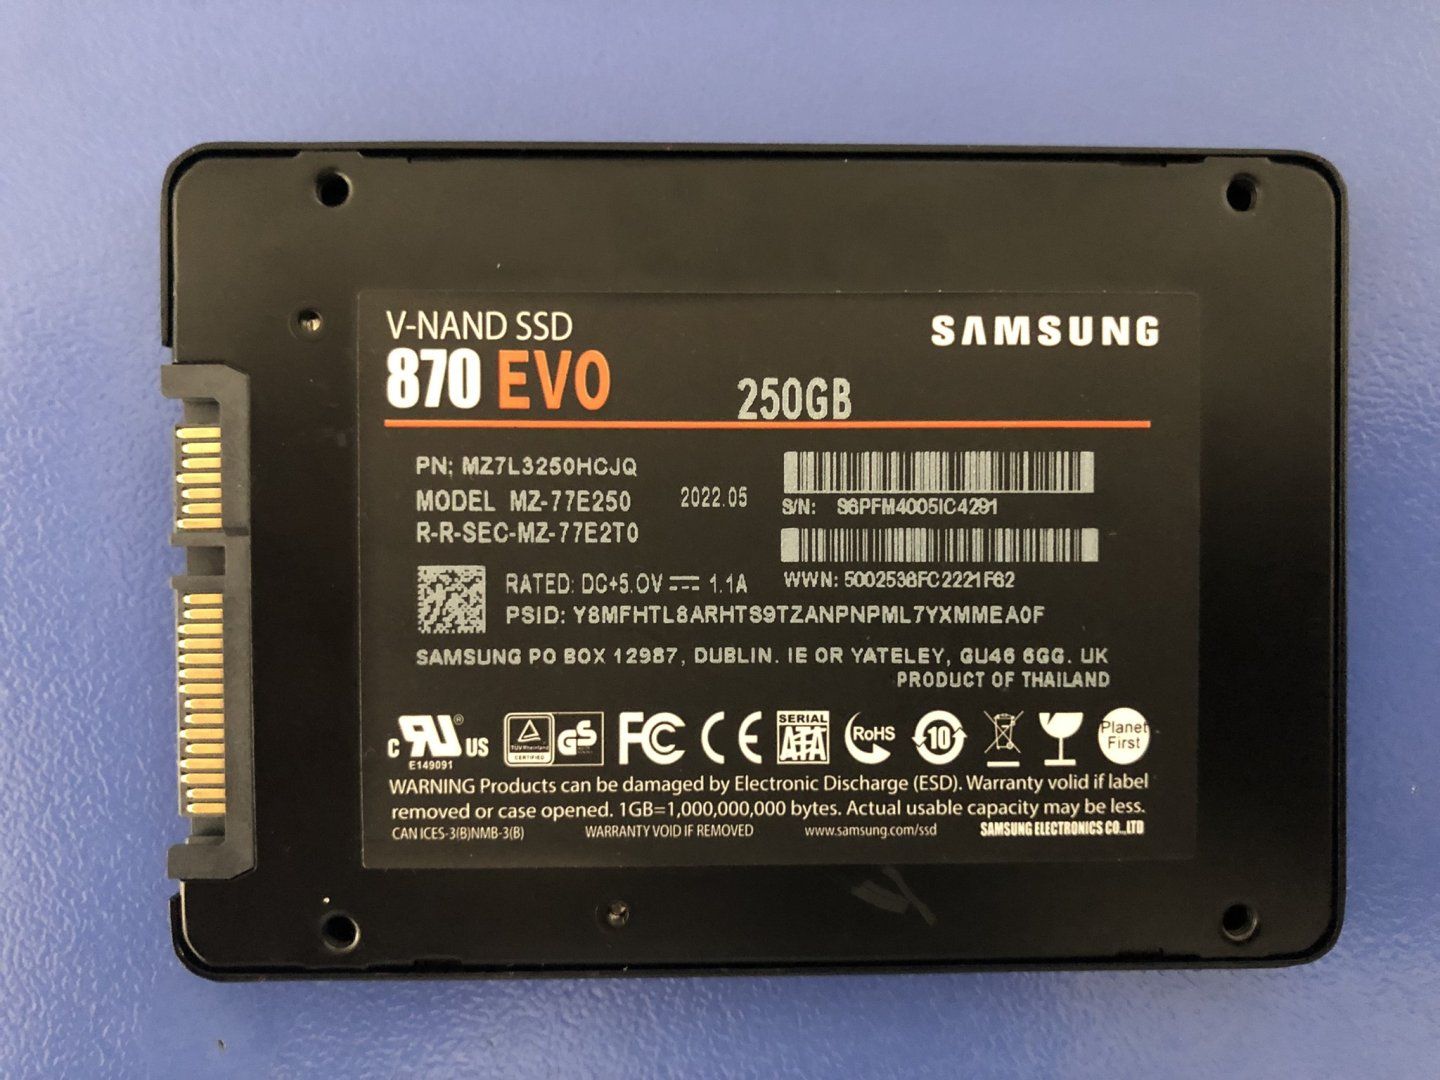 Sahte] Samsung 870 EVO sahte mi? | Technopat Sosyal